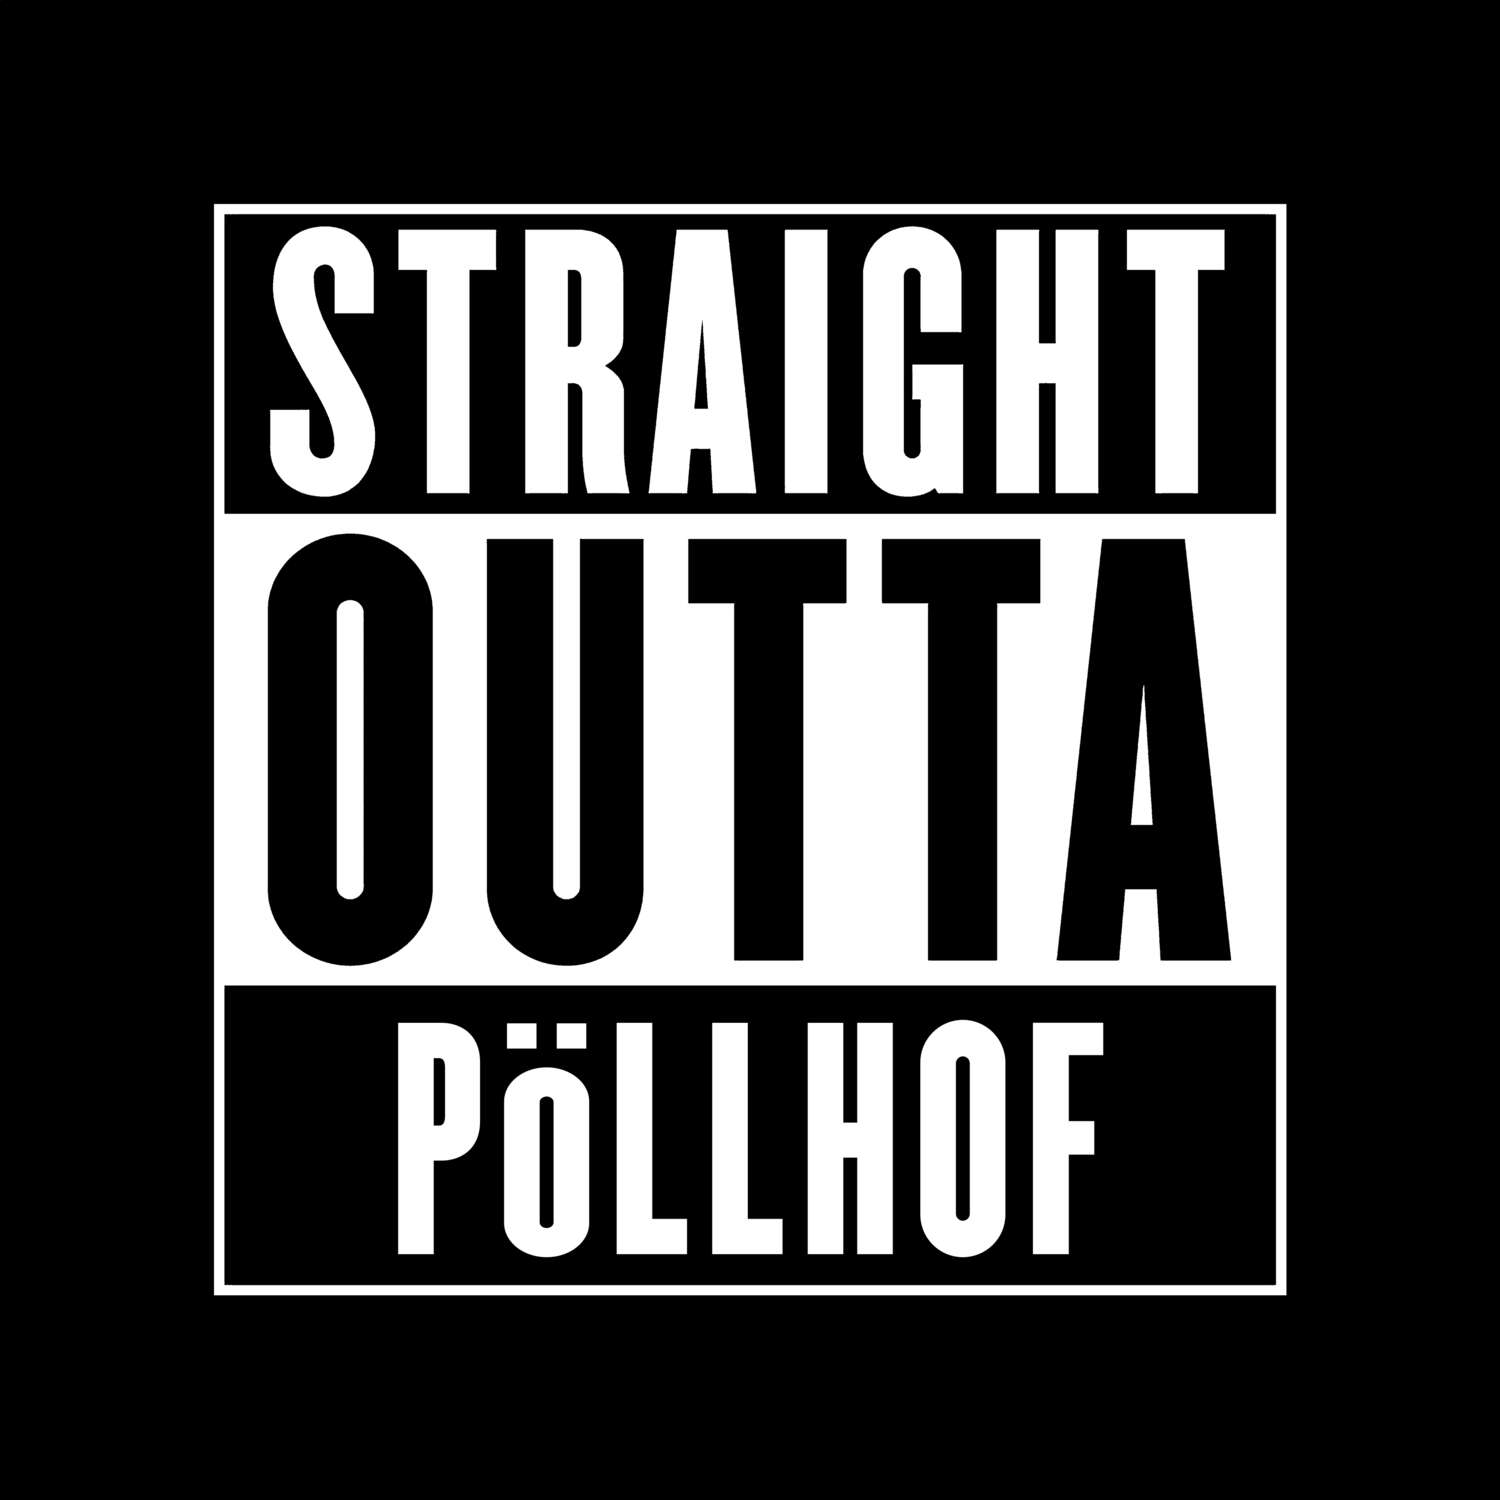 Pöllhof T-Shirt »Straight Outta«